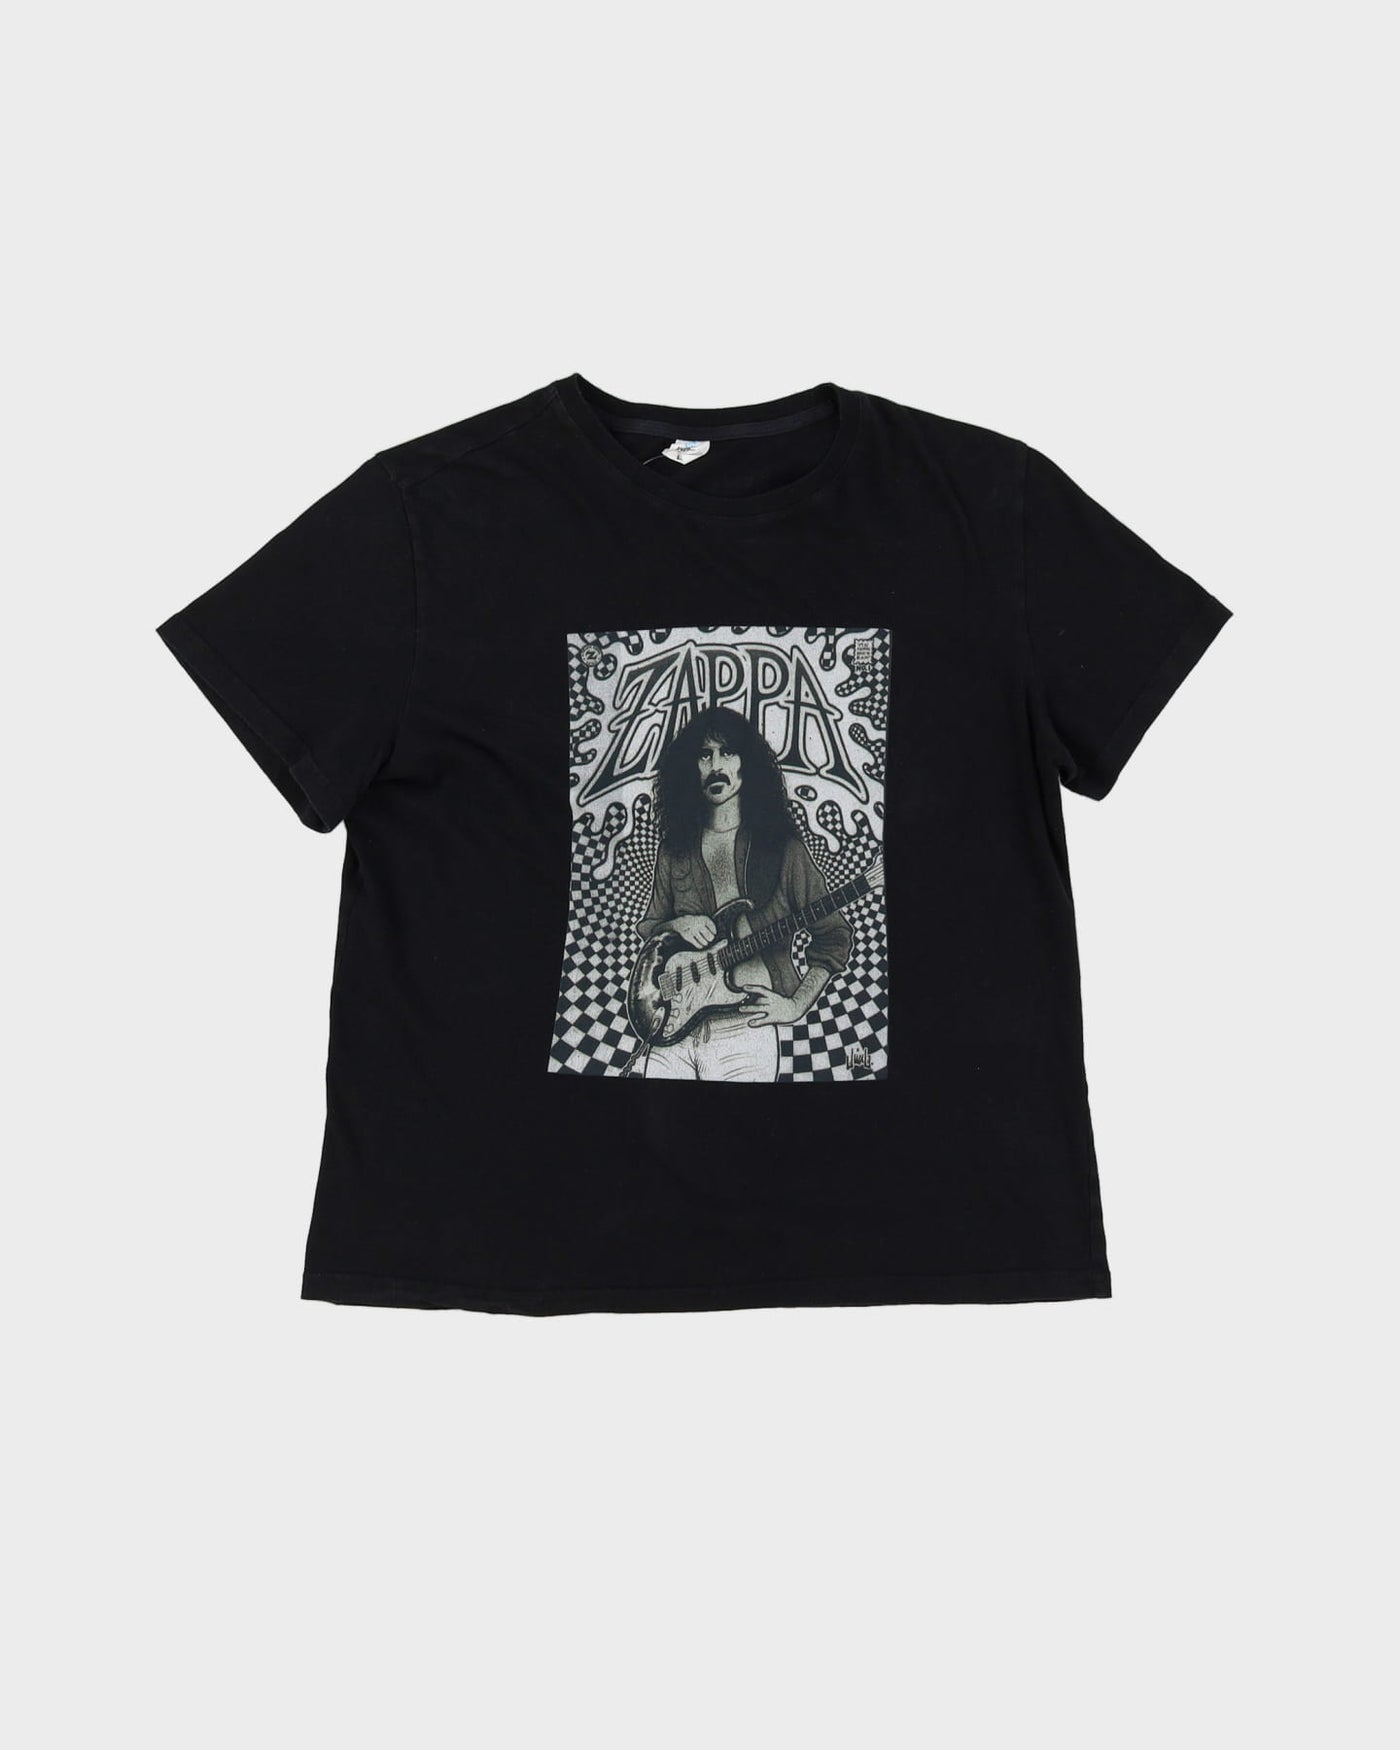 Frank Zappa Band T-Shirt - L